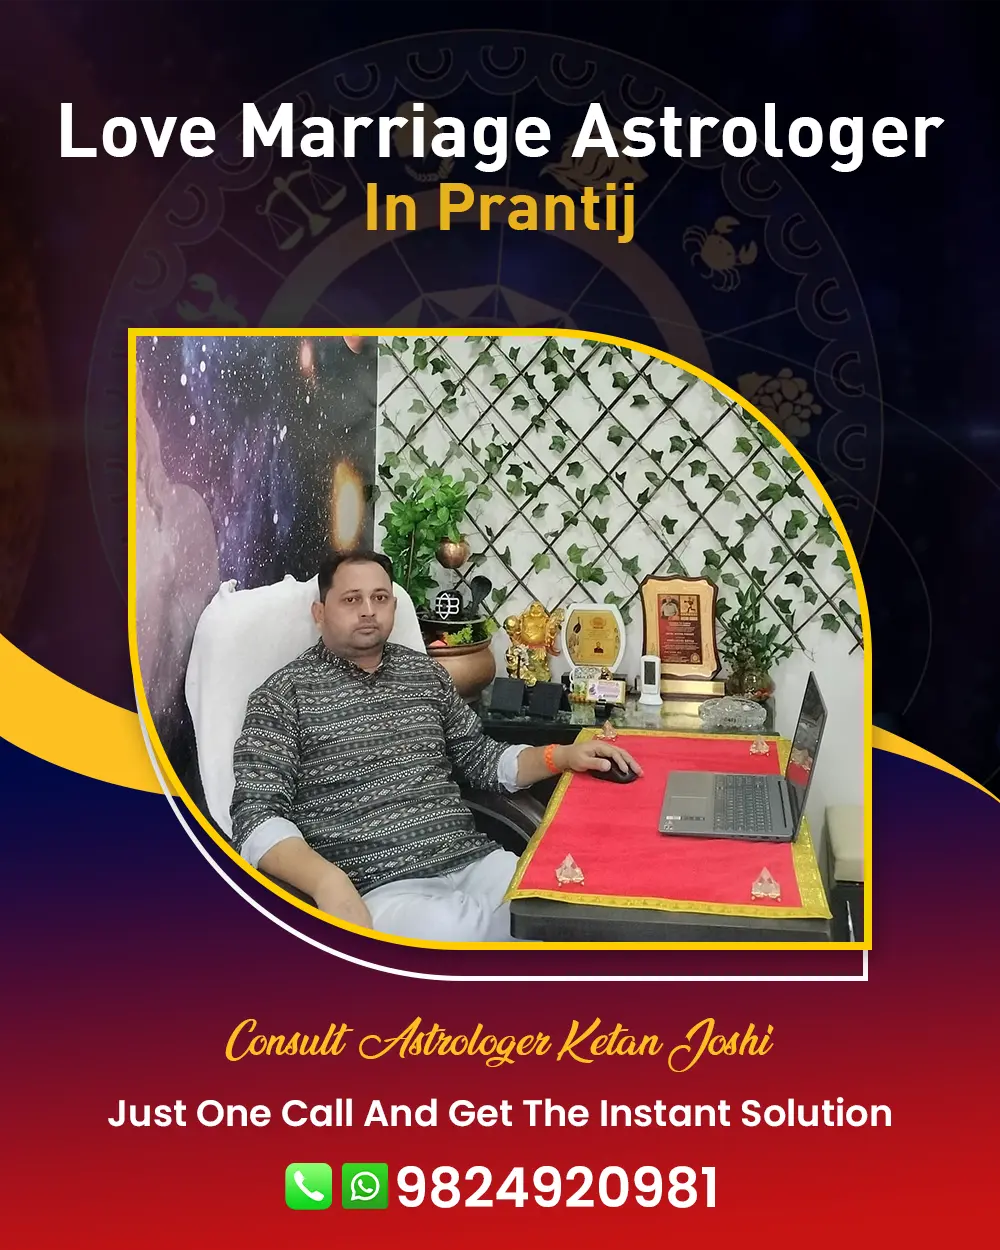 Love Marriage Astrologer In Prantij